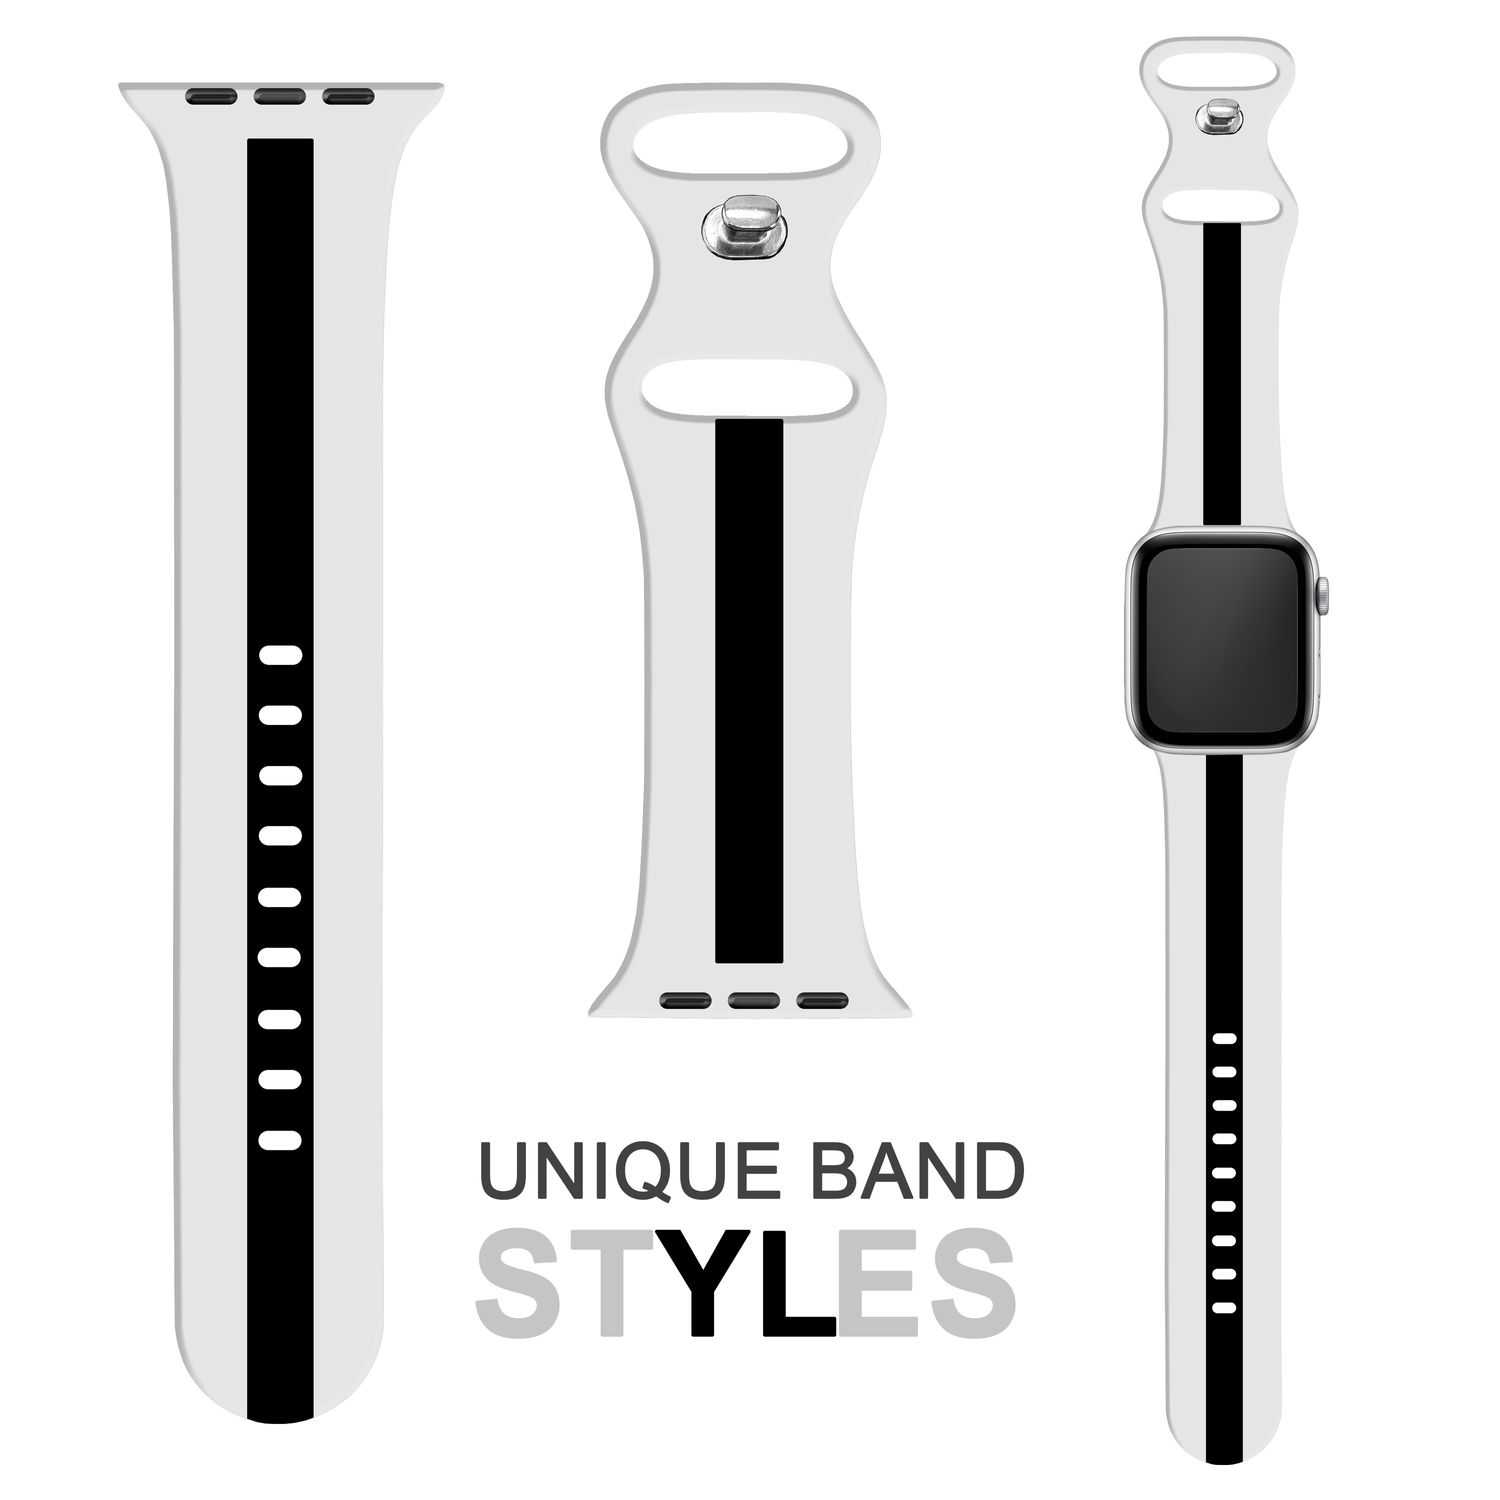 NALIA Gestreiftes Apple 38mm/40mm/41mm, Watch Smartwatch Weiß Ersatzarmband, Silikon Armband, Schwarz Apple